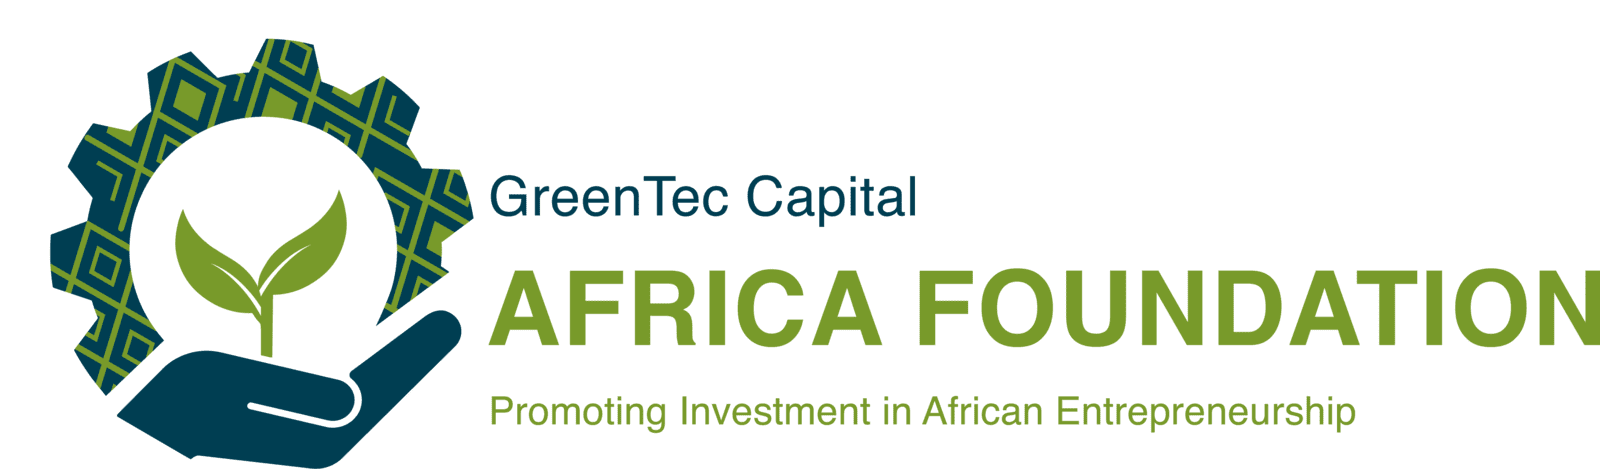 GreenTec Capital Africa Foundation Logo